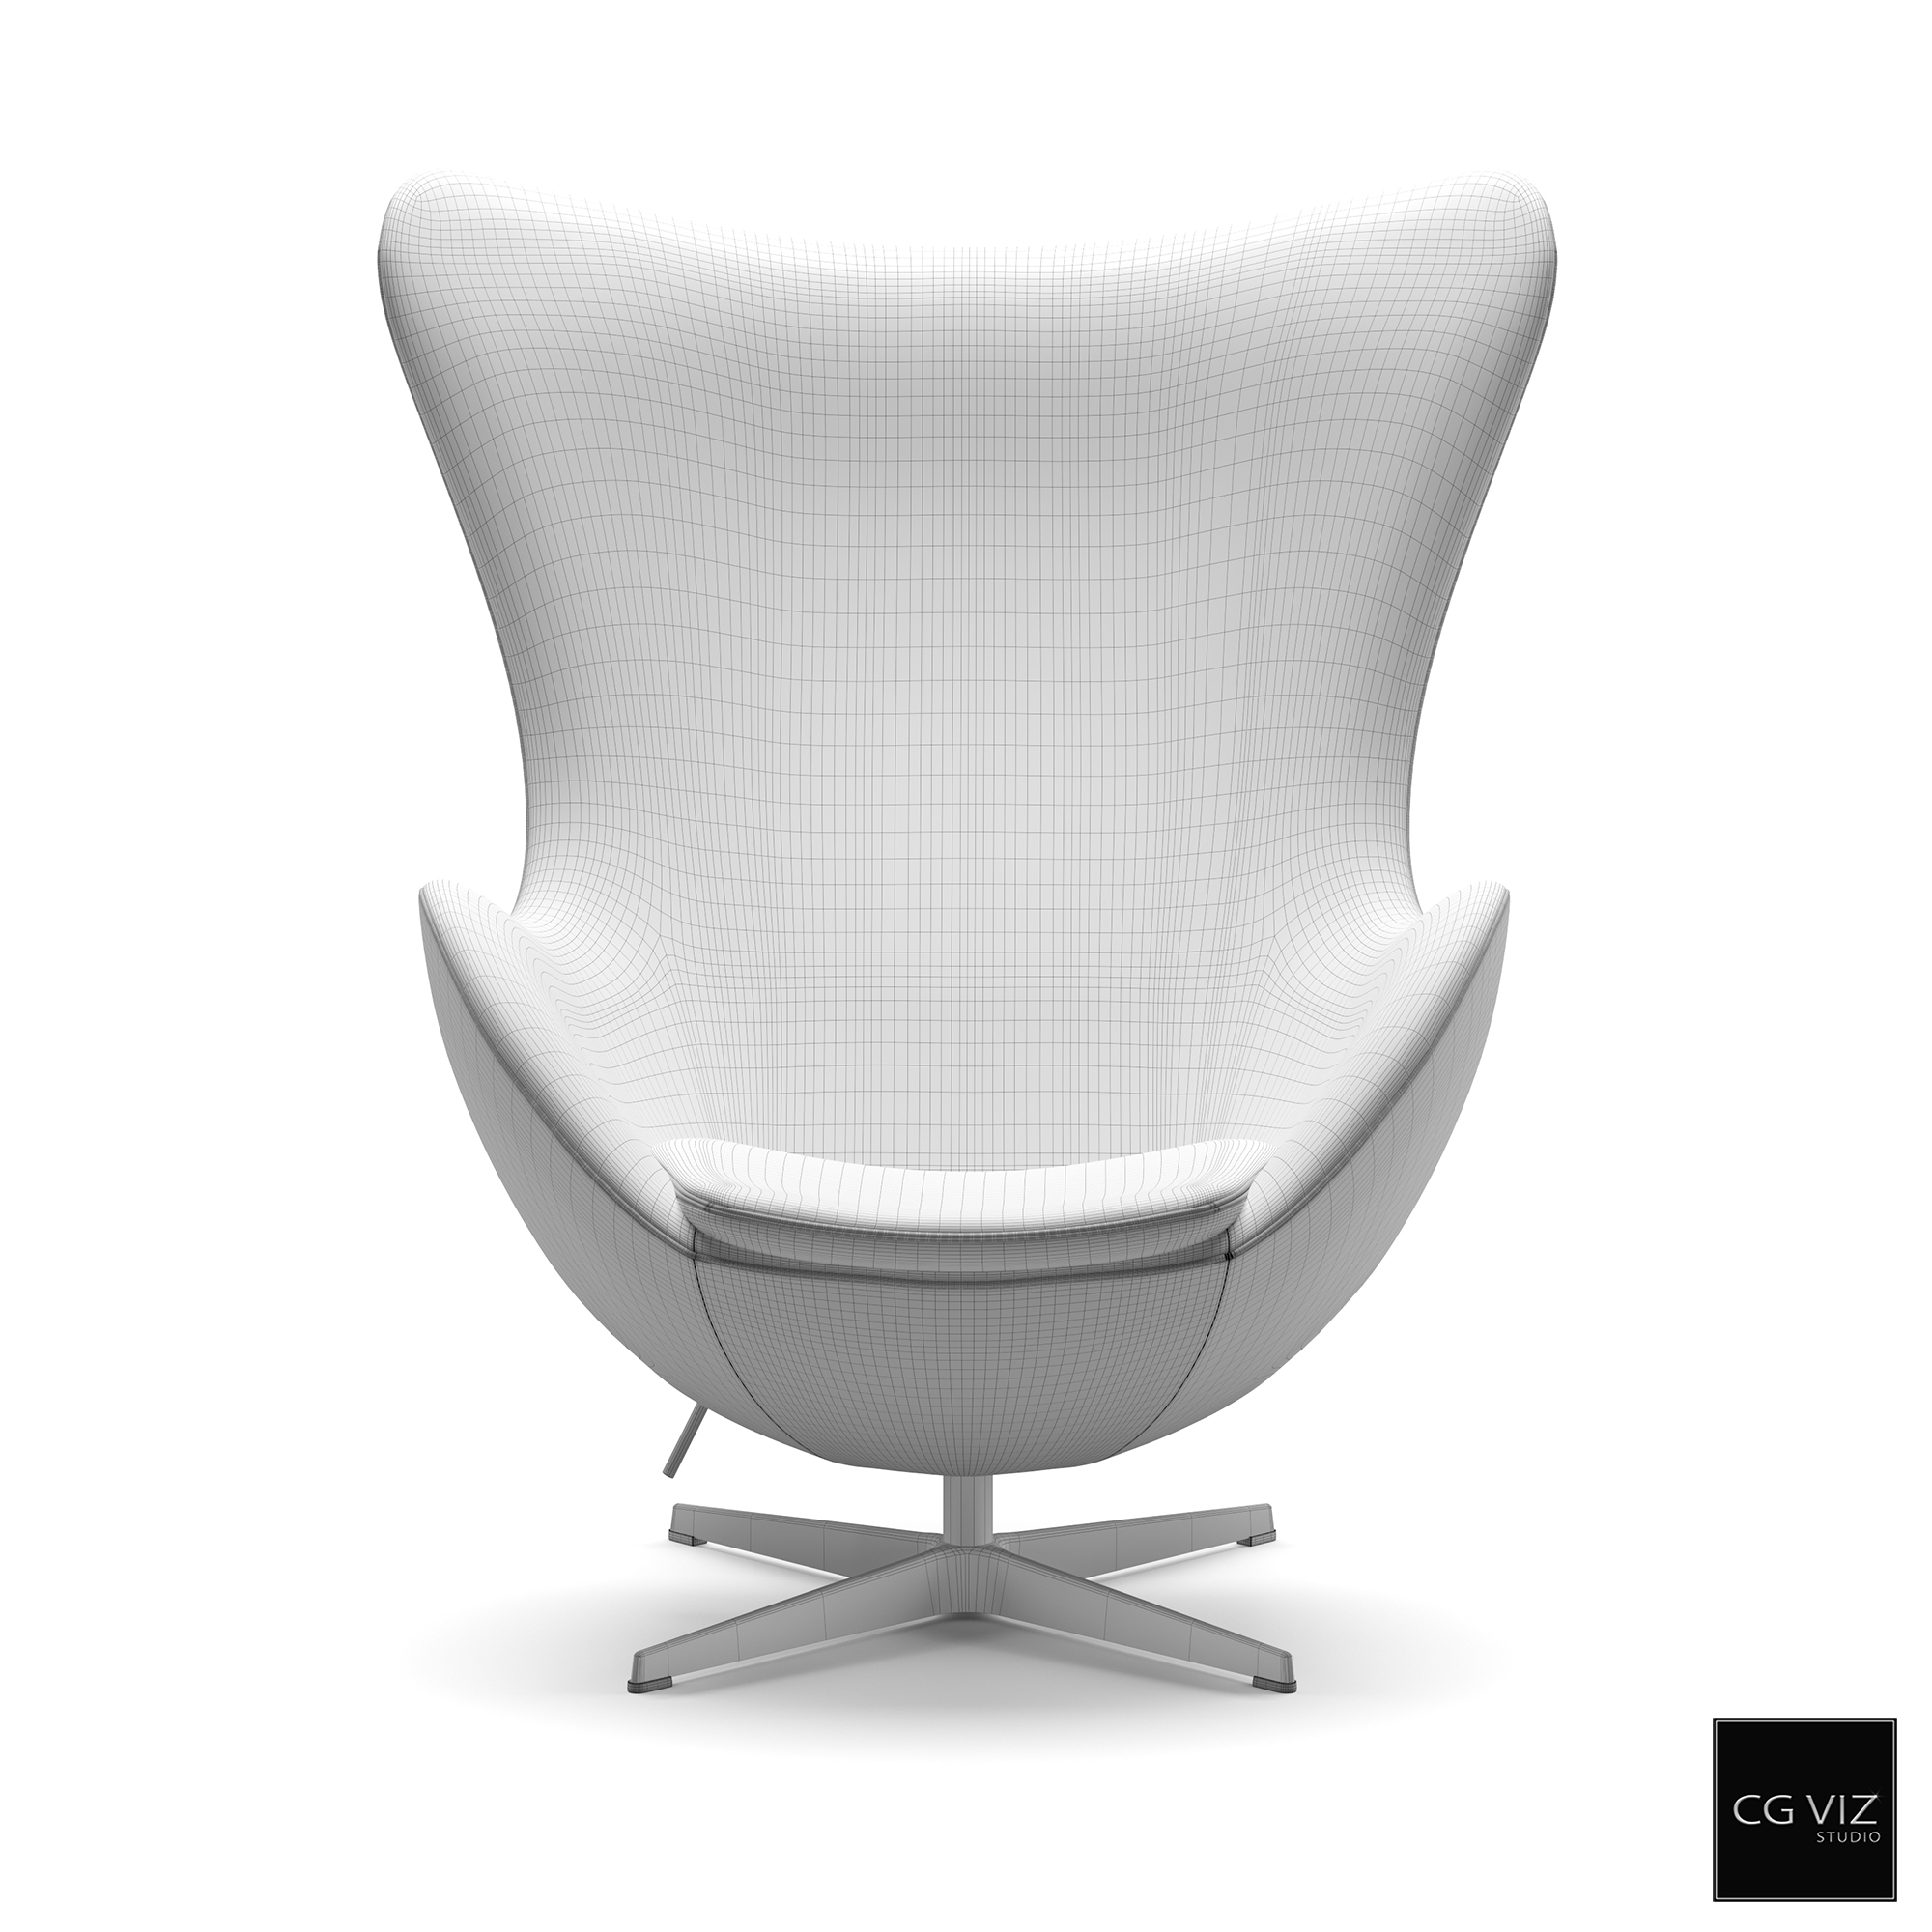 Wireframe preview of Fritz Hansen Egg Lounge Chair 3D Model by CG Viz Studio